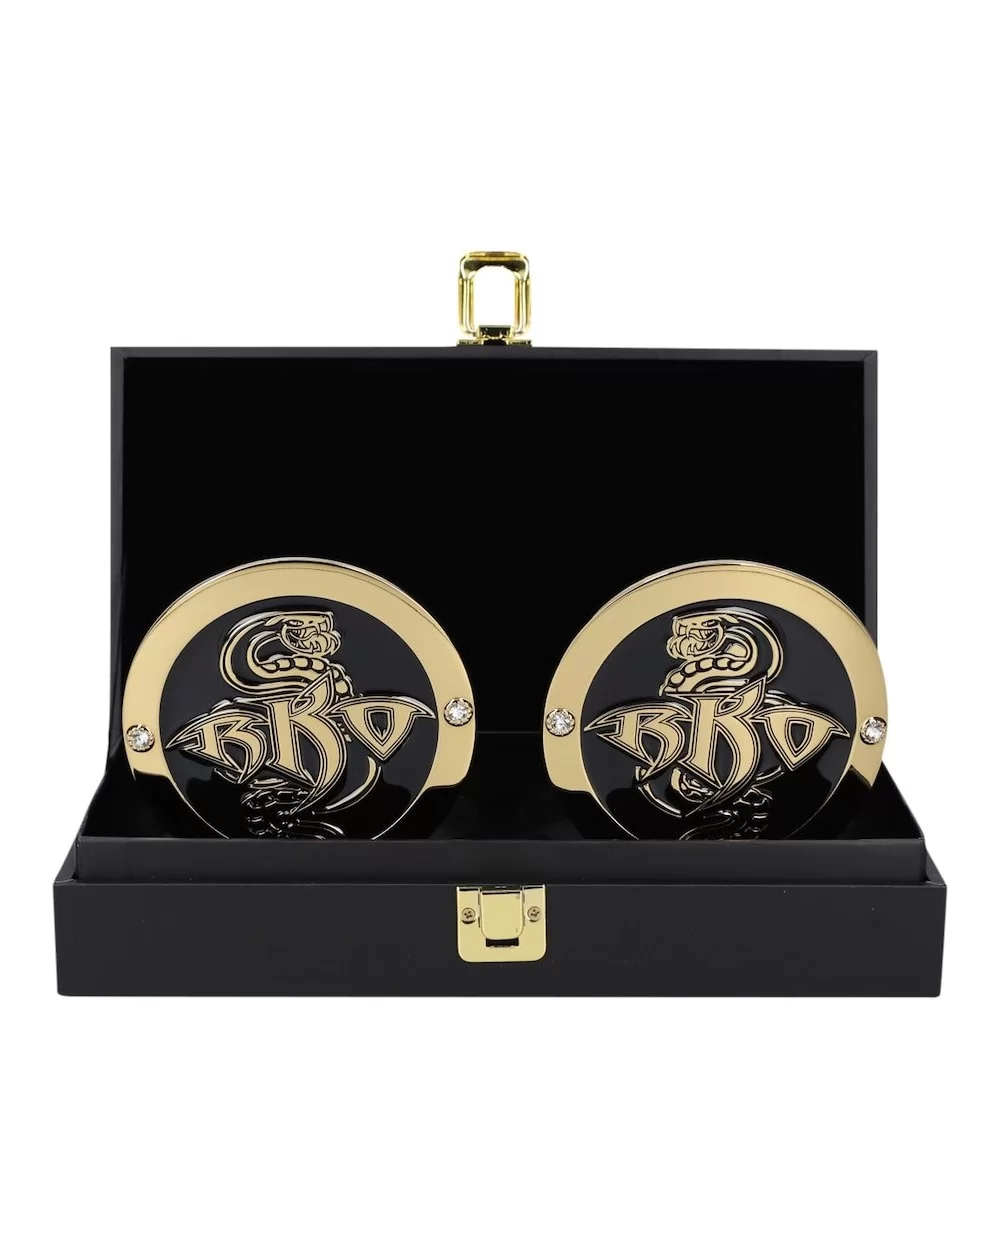 Randy Orton Championship Replica Side Plate Box Set $37.60 Collectibles